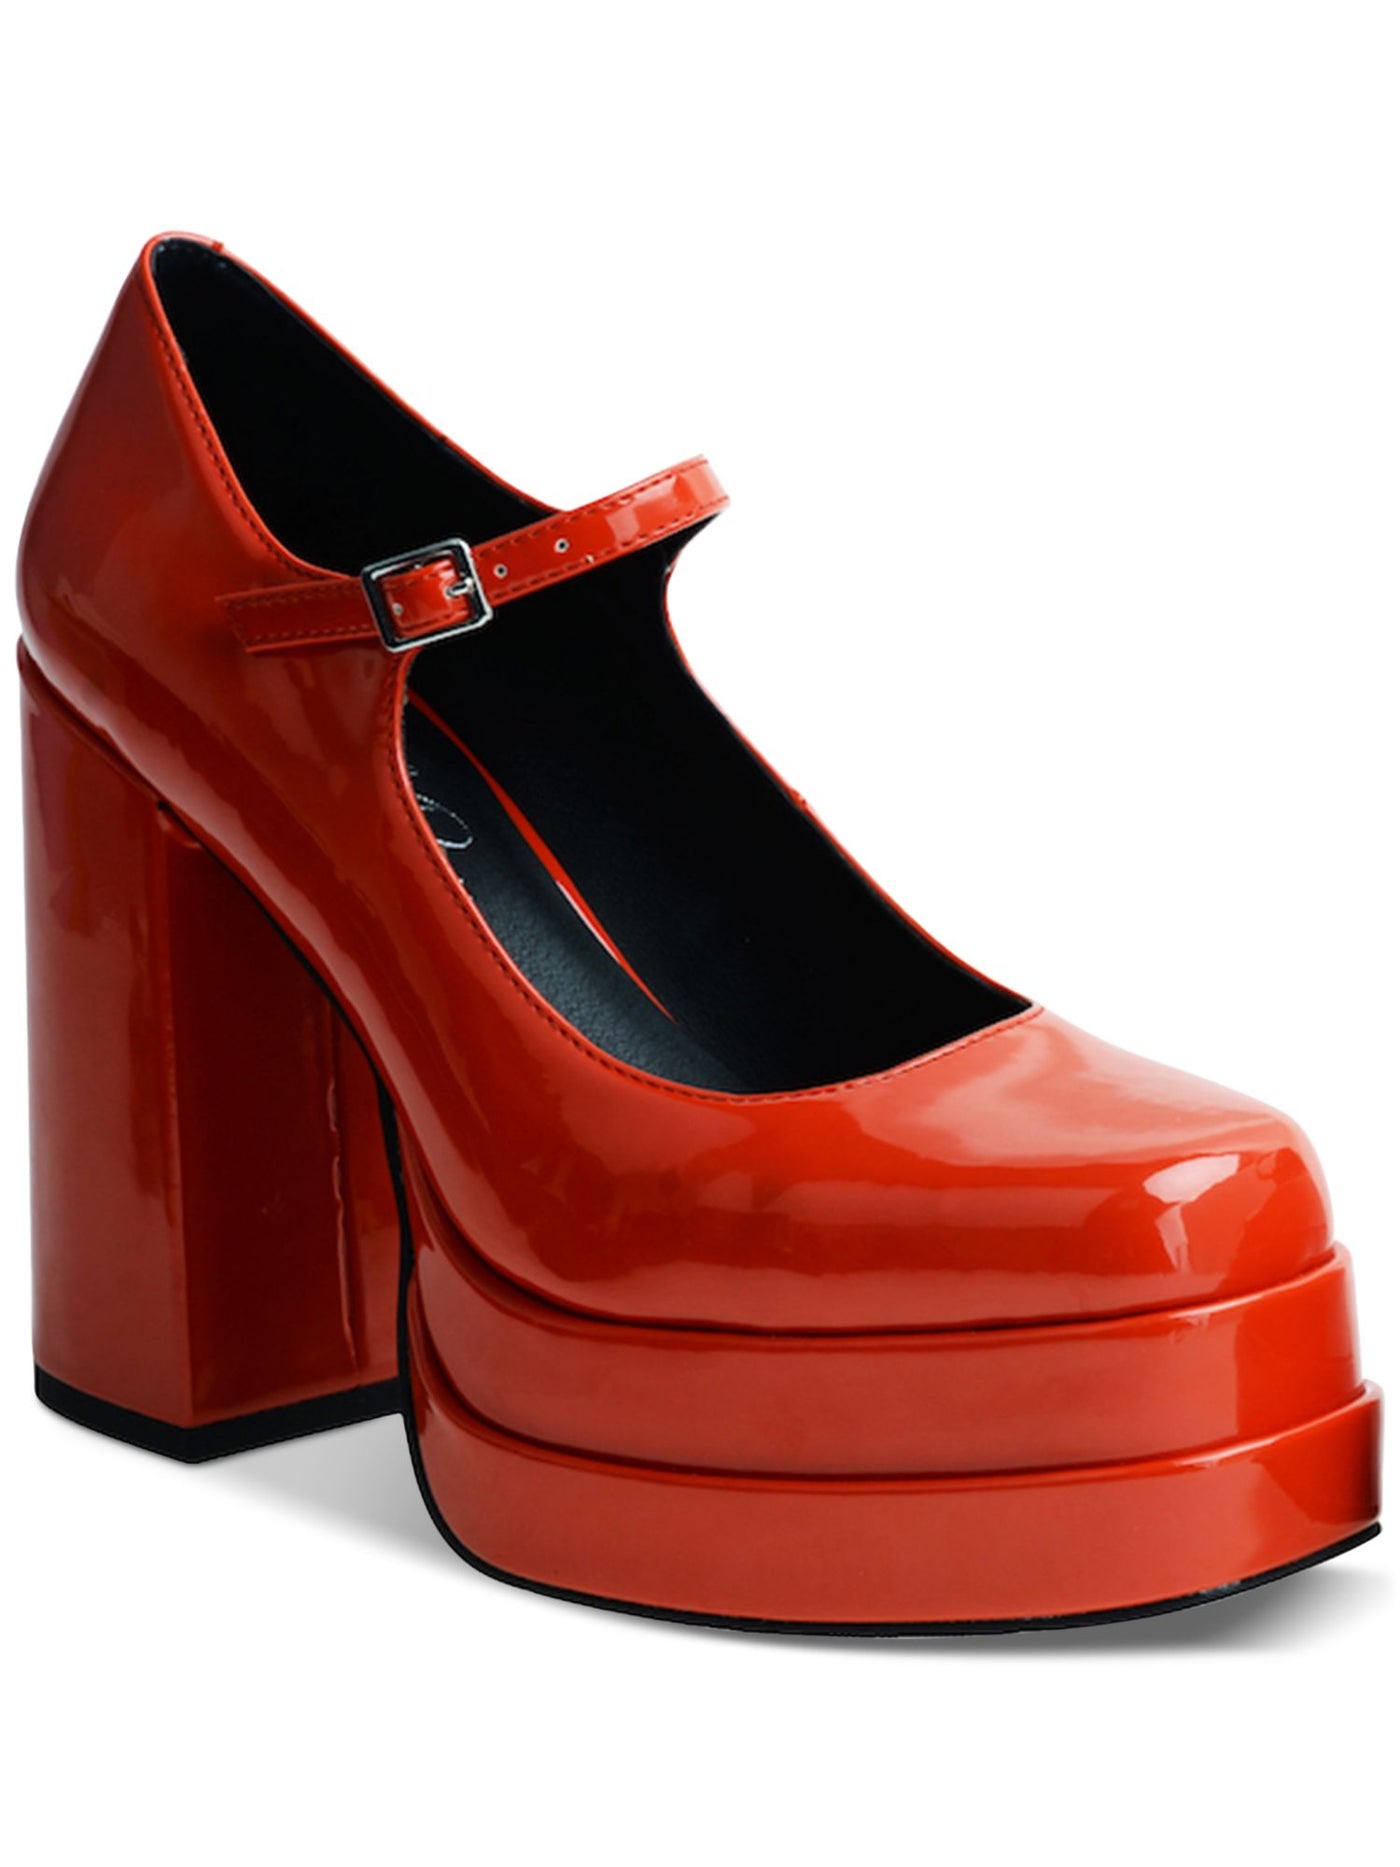 WILD PAIR Womens Red 1-1/2" Platform Adjustable Octavia Square Toe Block Heel Buckle Dress Pumps Shoes 7.5 M